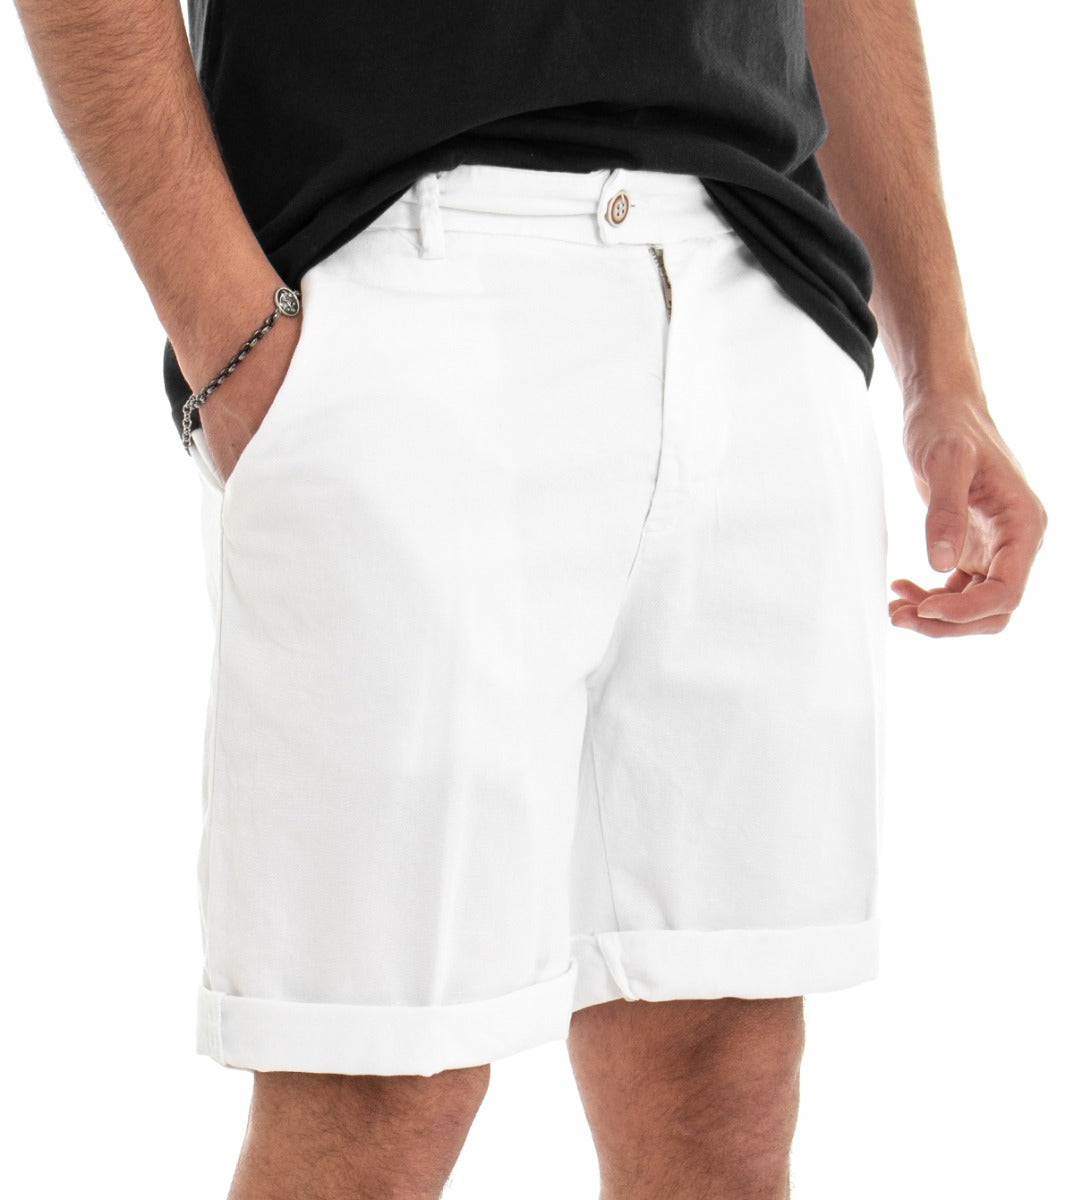 Bermuda Short Men's Shorts White Cotton America Pocket GIOSAL-PC1379A